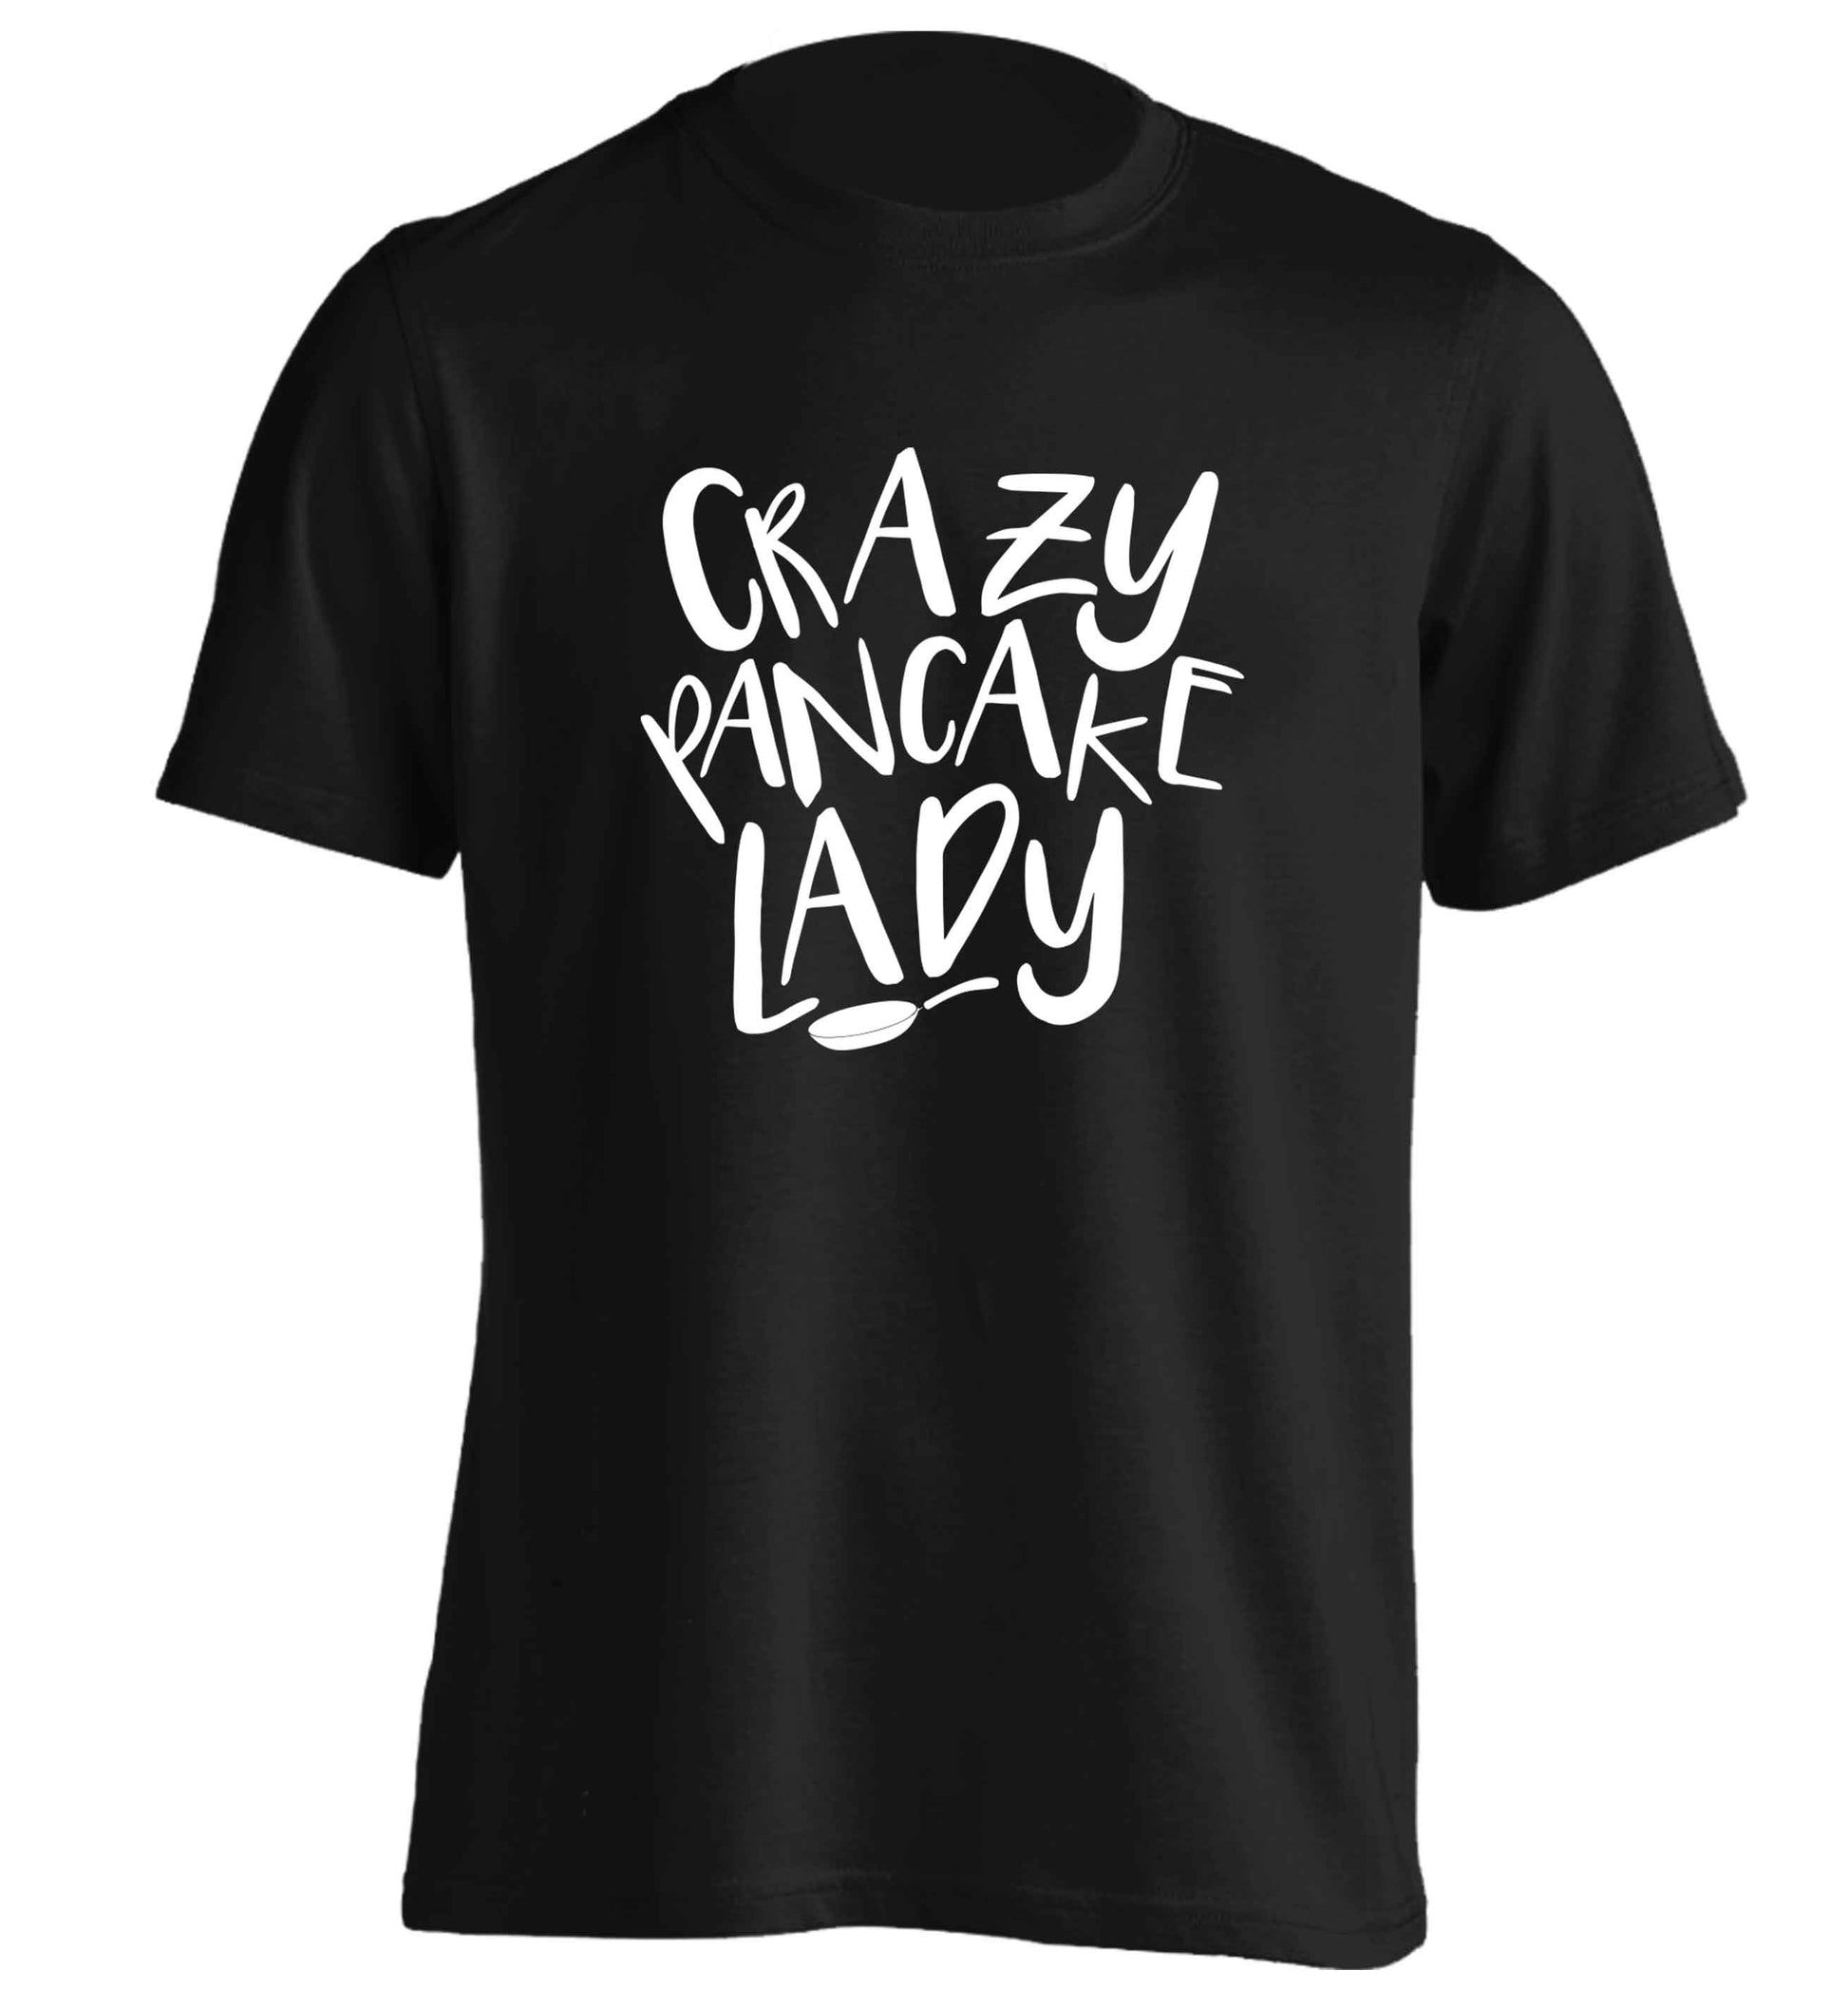 Crazy pancake lady adults unisex black Tshirt 2XL